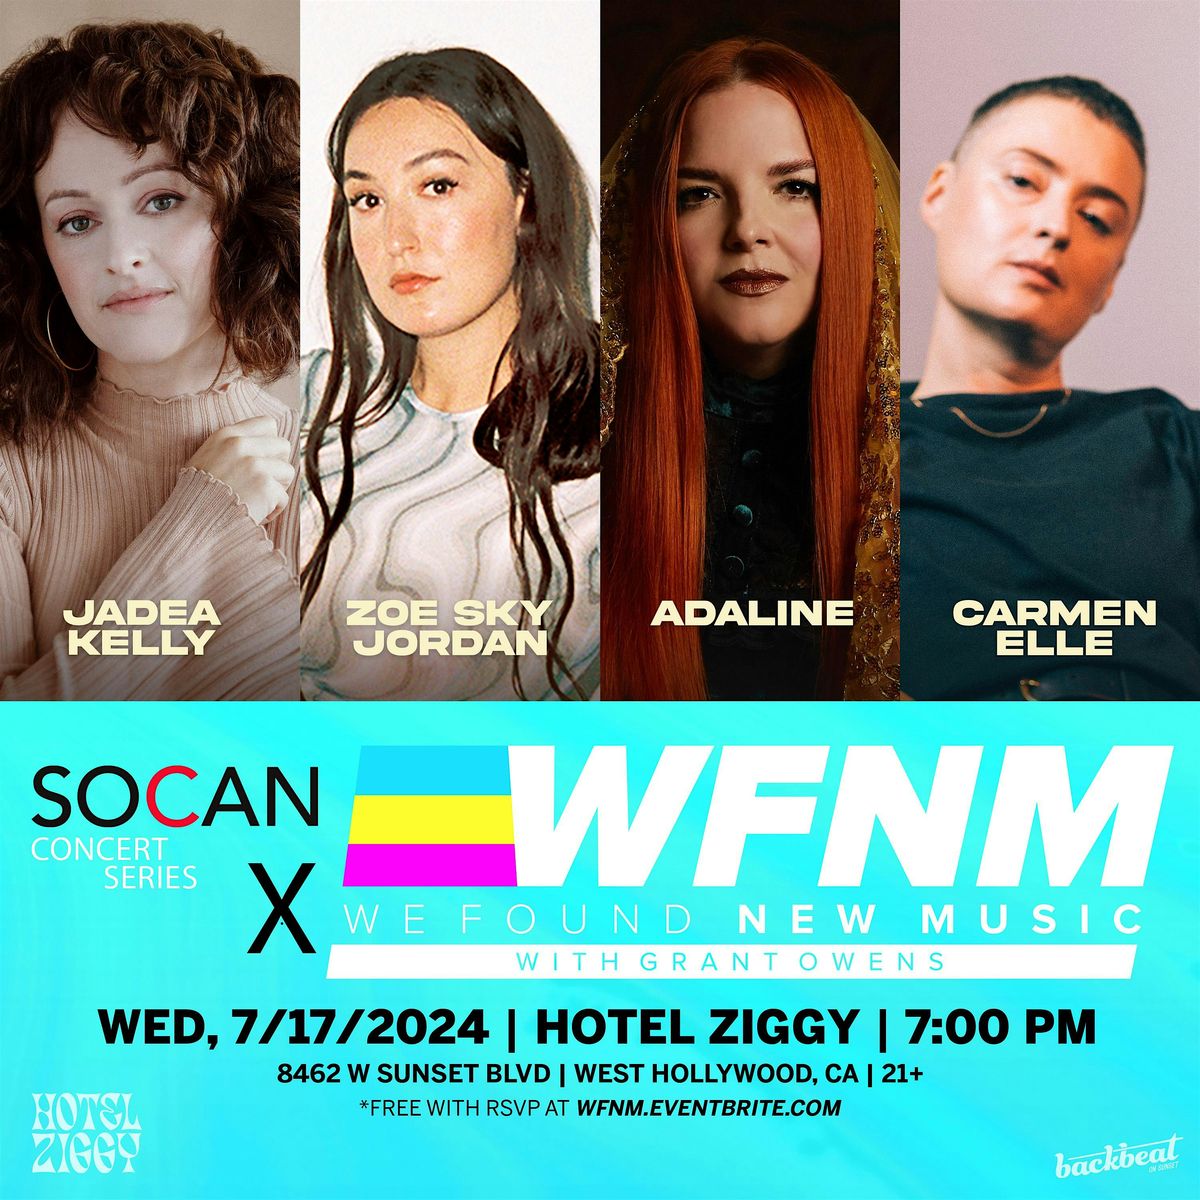 SOCAN X WFNM - Zoe Sky Jordan, Adaline, Jadea Kelly, Carmen Elle